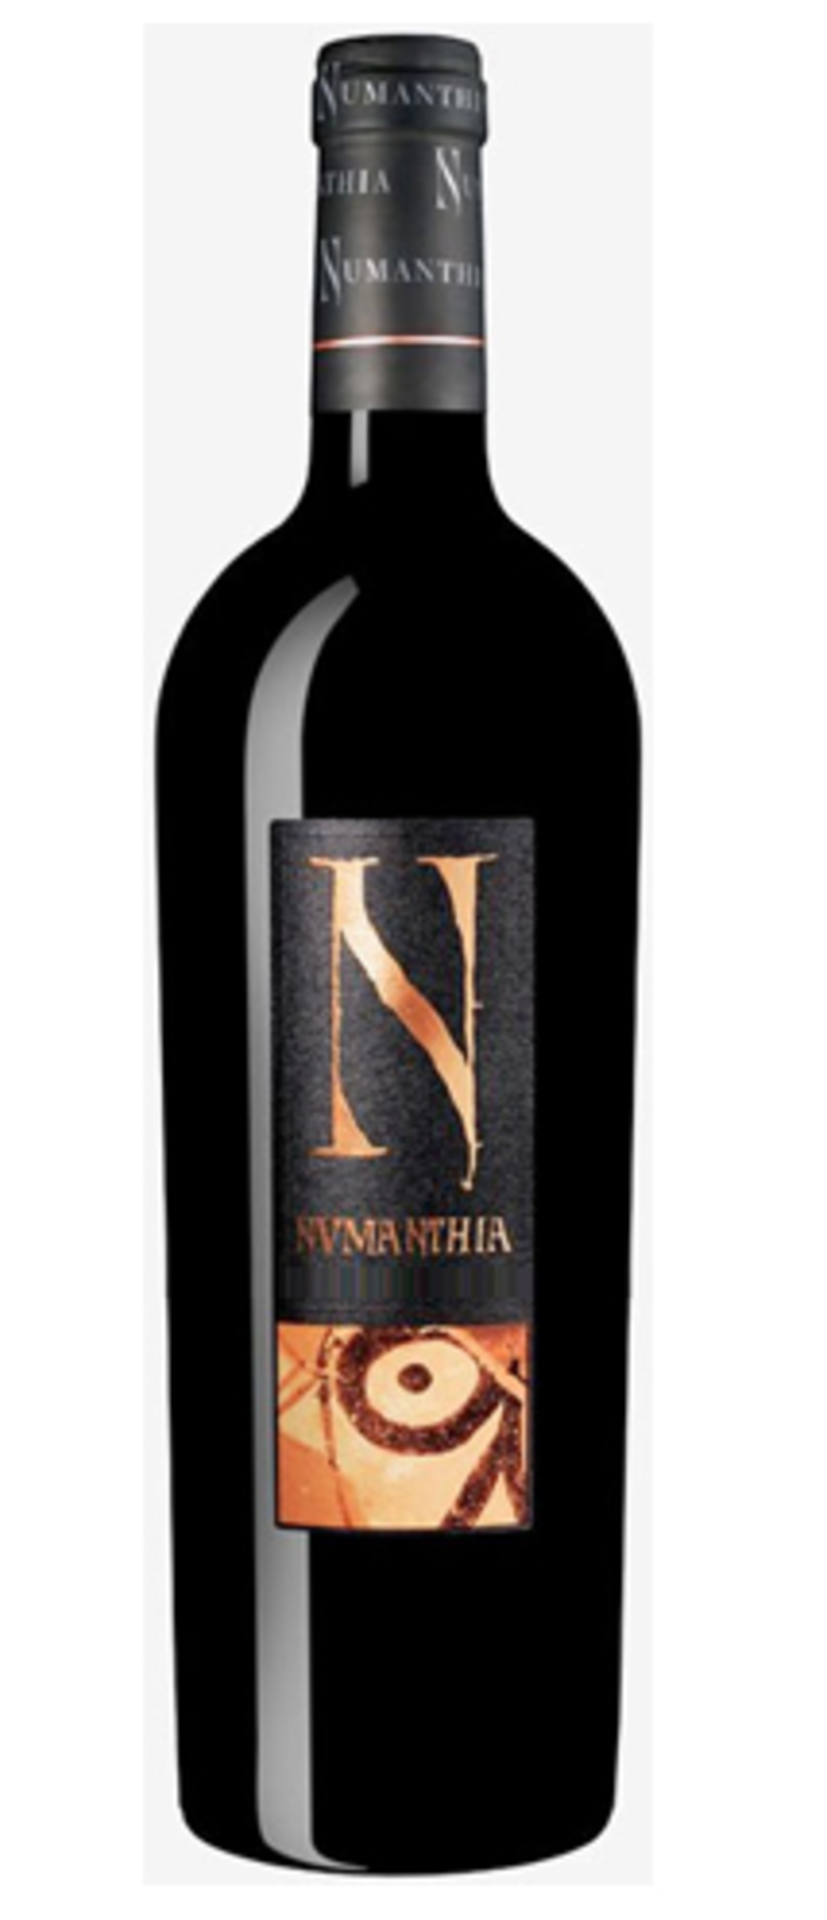 Numanthia Tempranilo Toro, Spain 2011 750ml ( Bid Is For 1x Bottle Option To Purchase More)